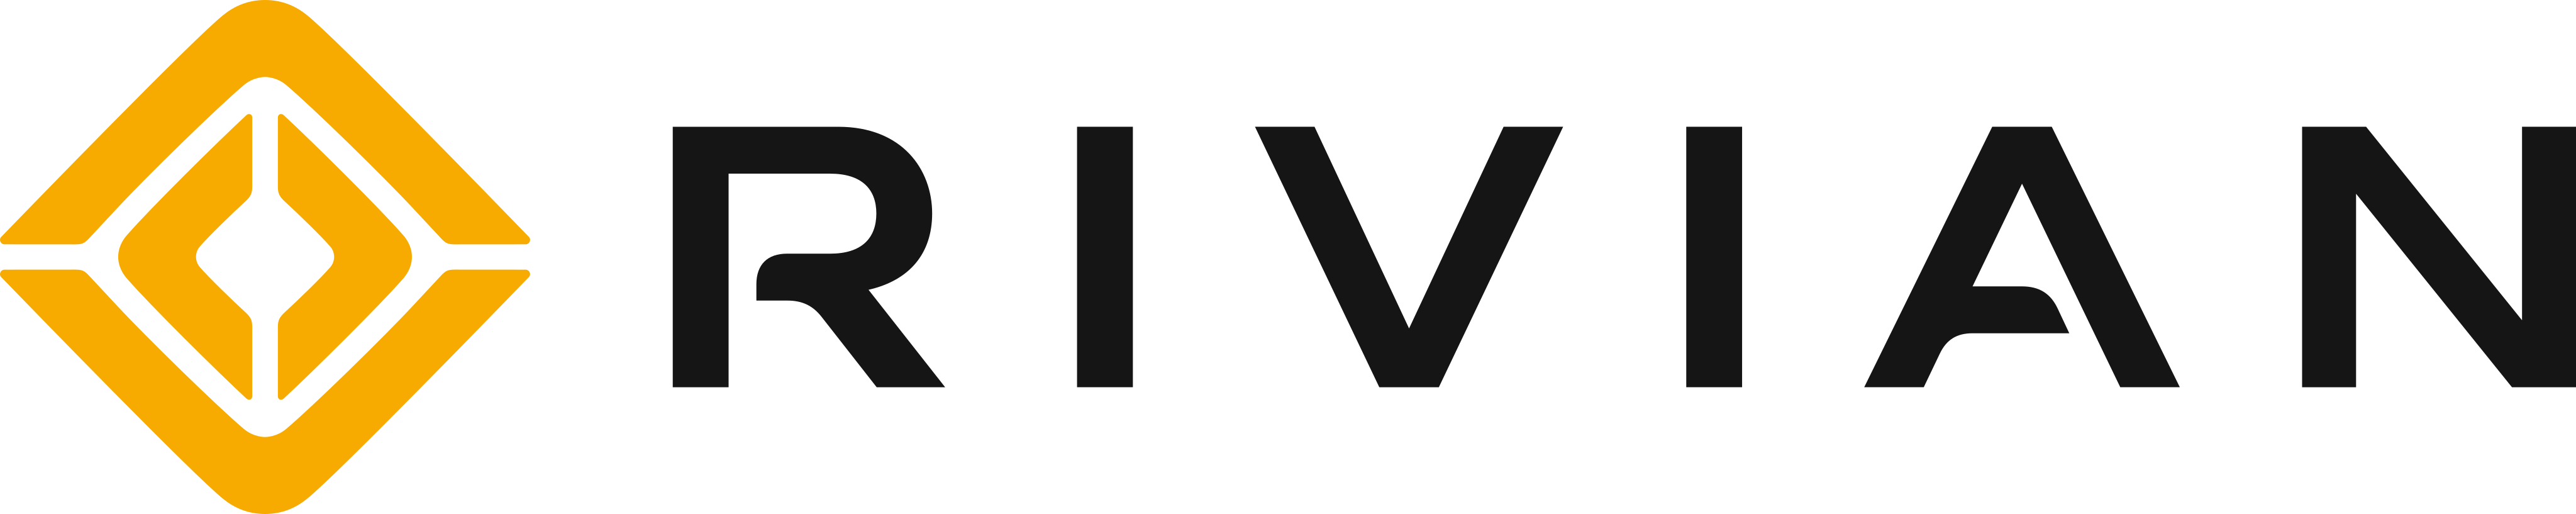 rivian logo - Rivian Logo